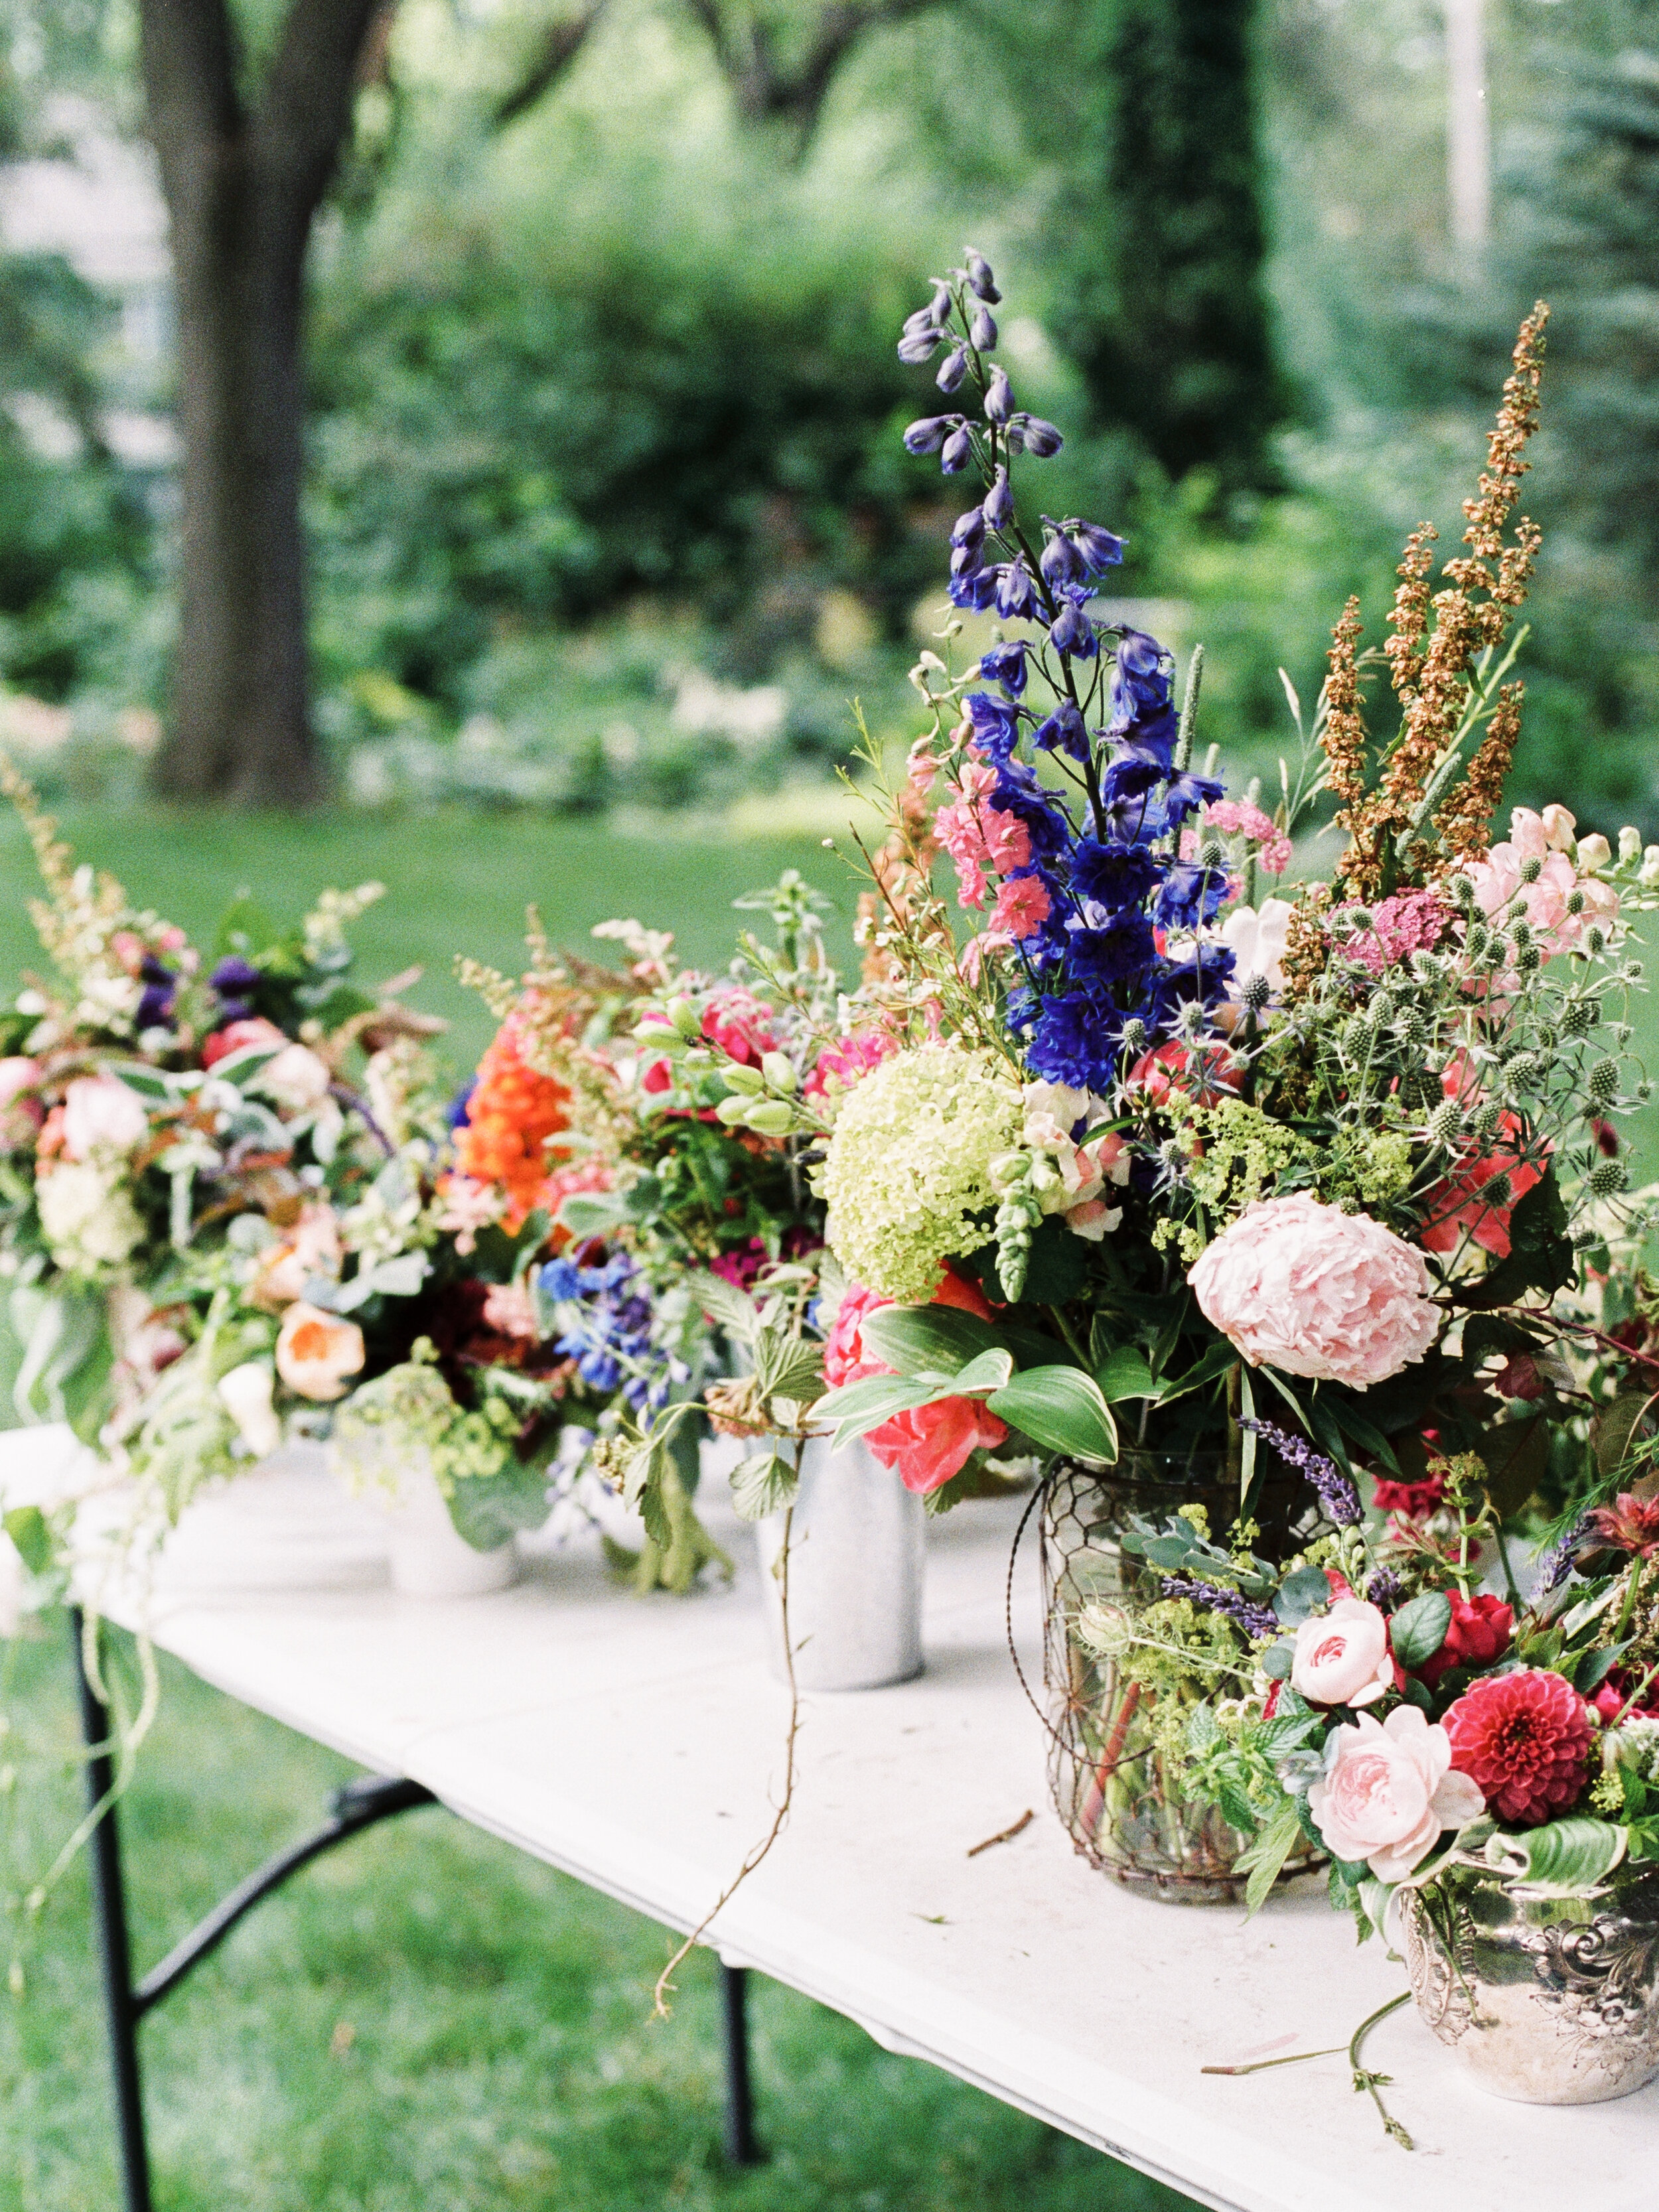 typical June flower spread - photo by Splendid Musins photography.jpg